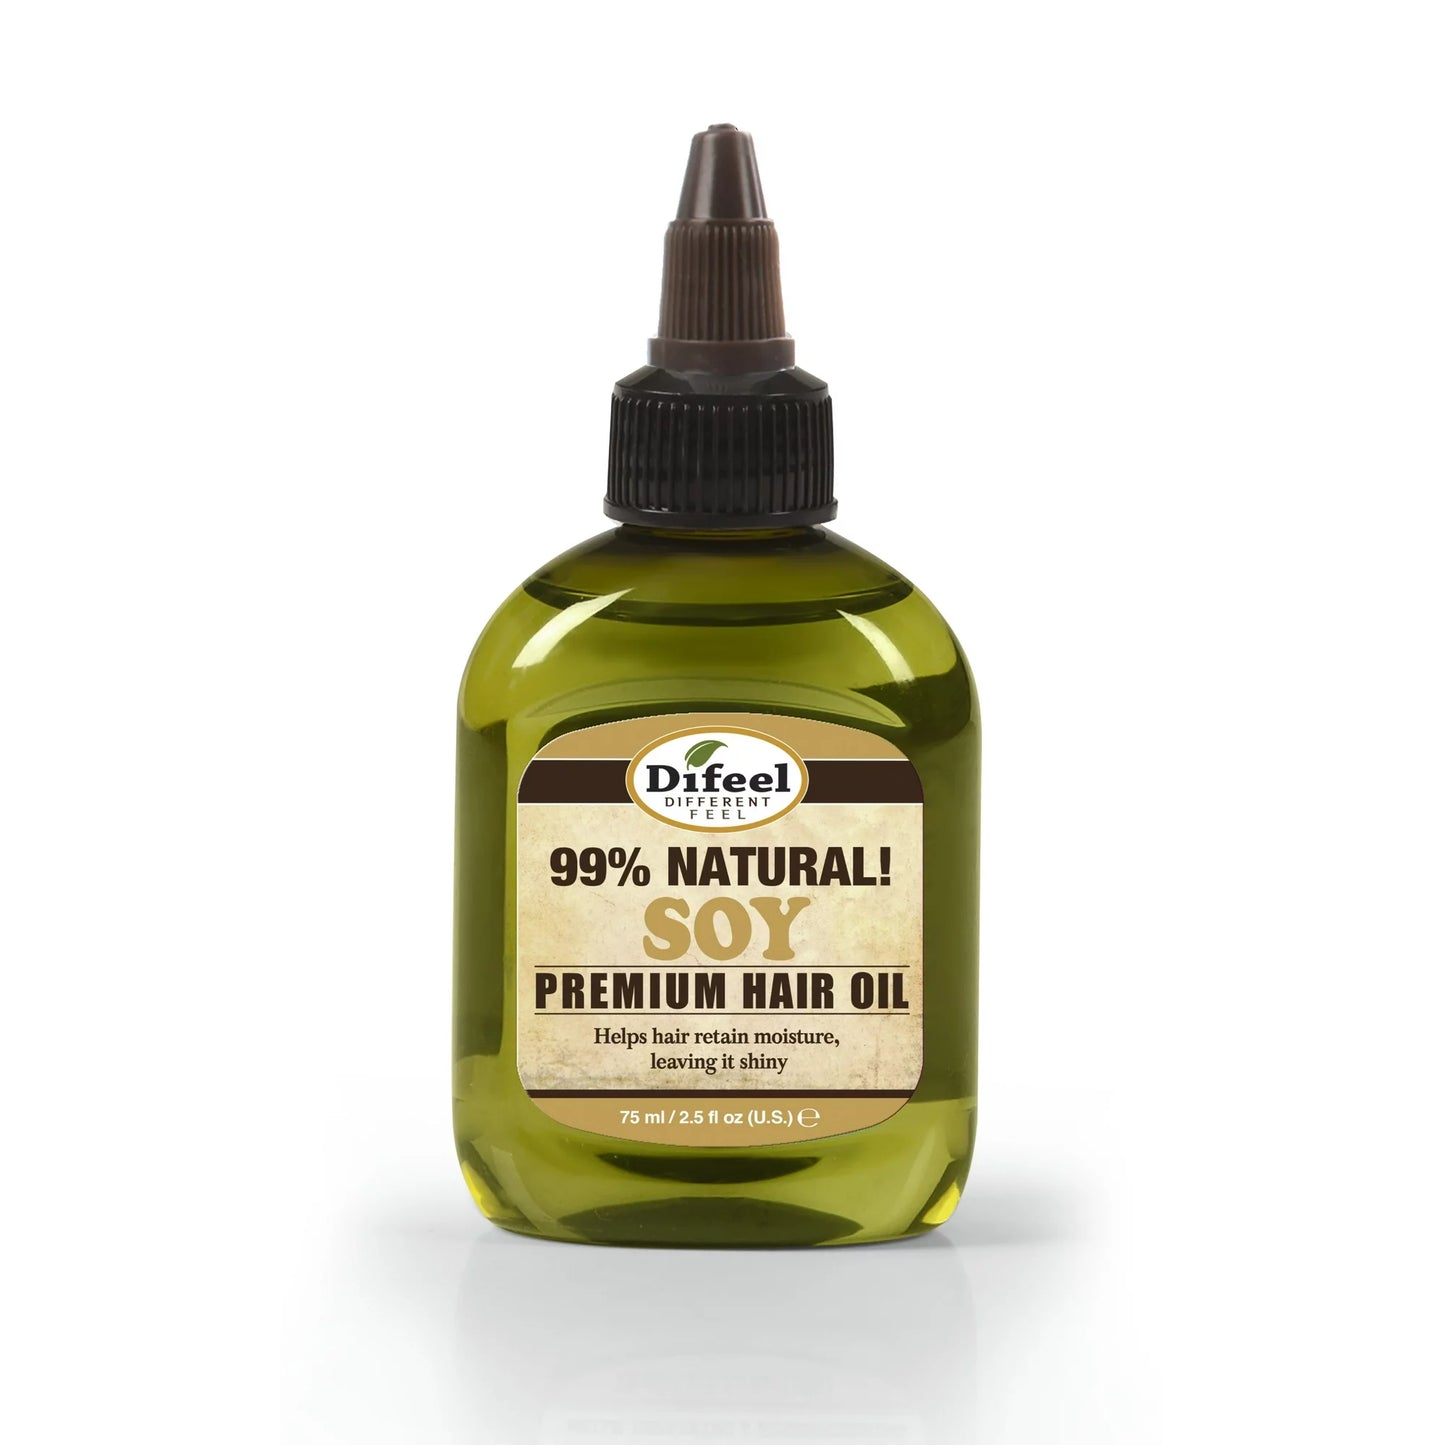 Difeel Premium Natural Hair Oil - Soy Oil 2.5 Oz.